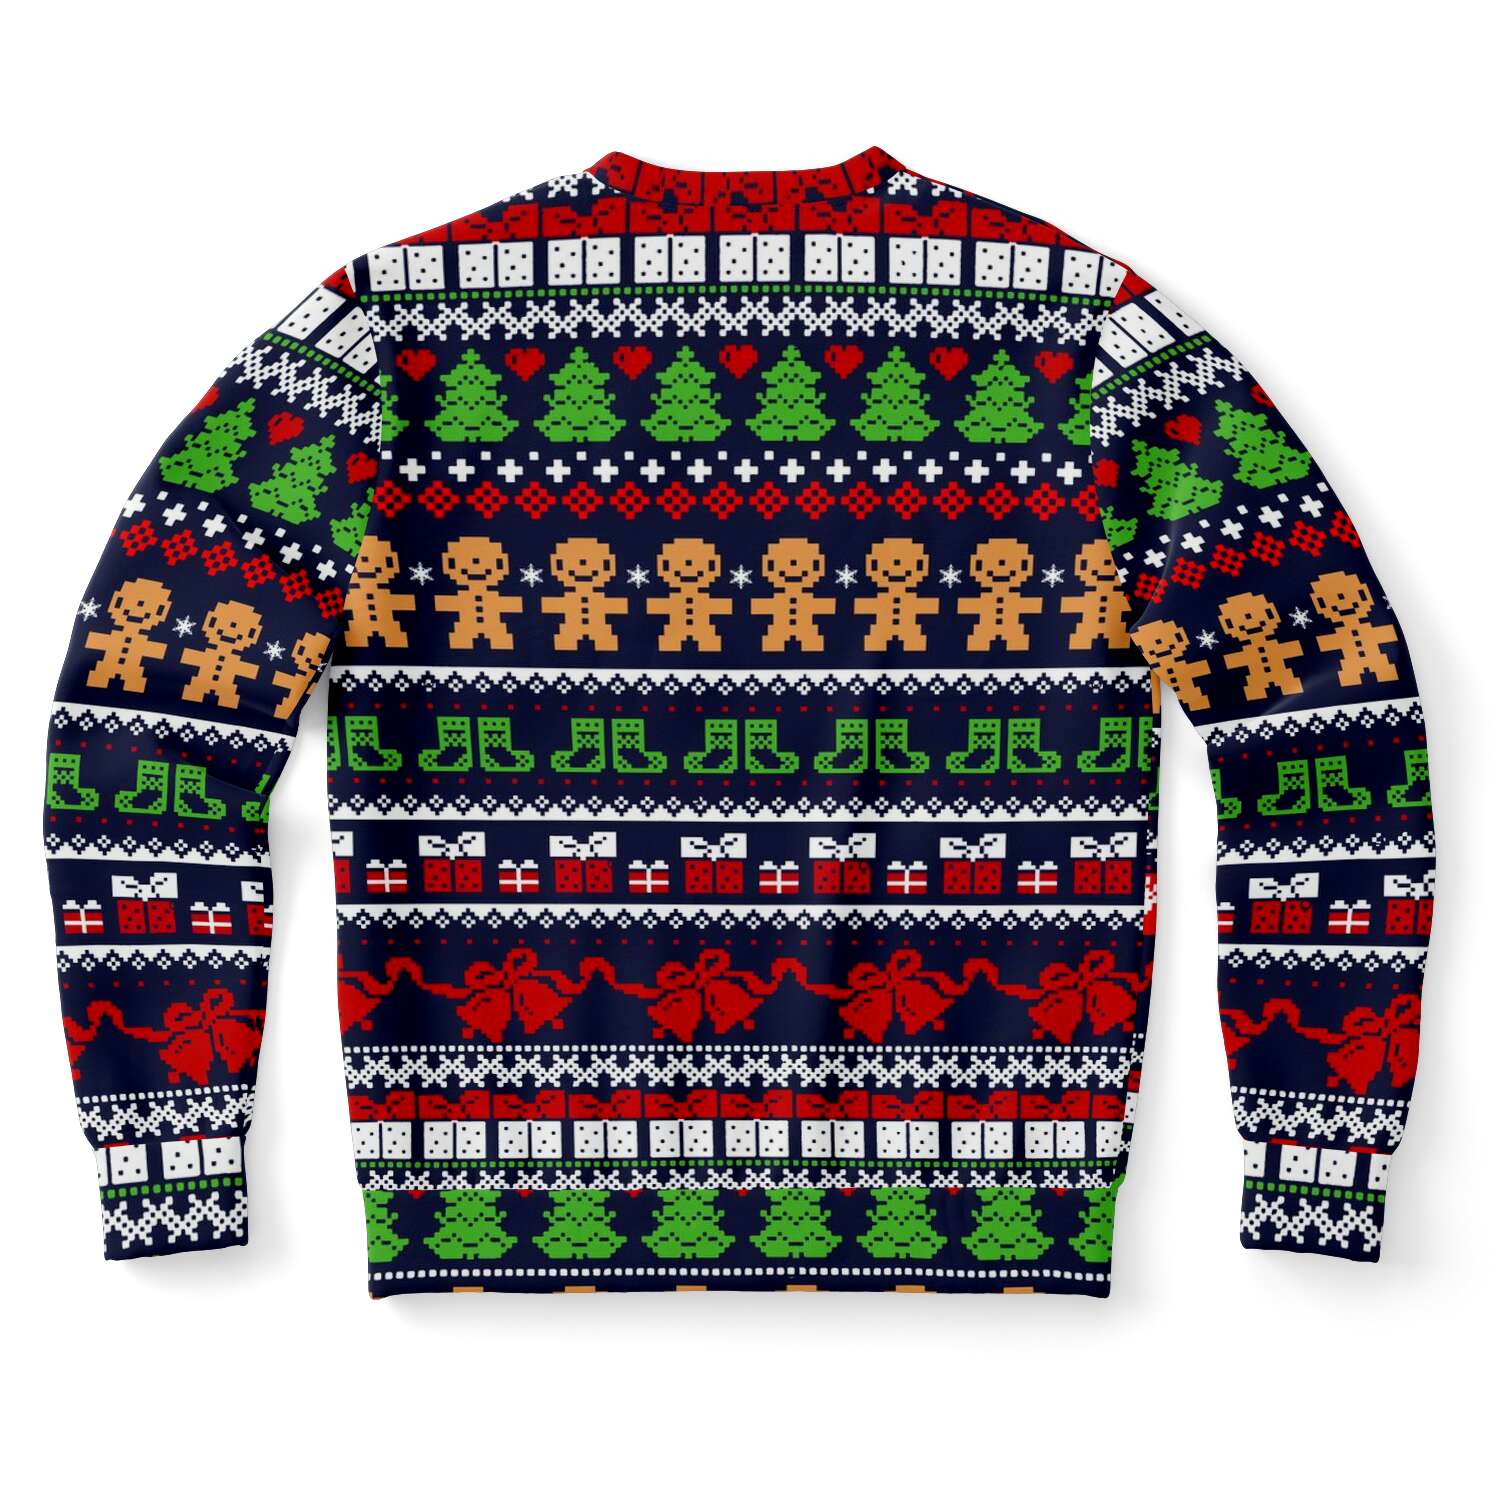 Christmas Puns Sweater